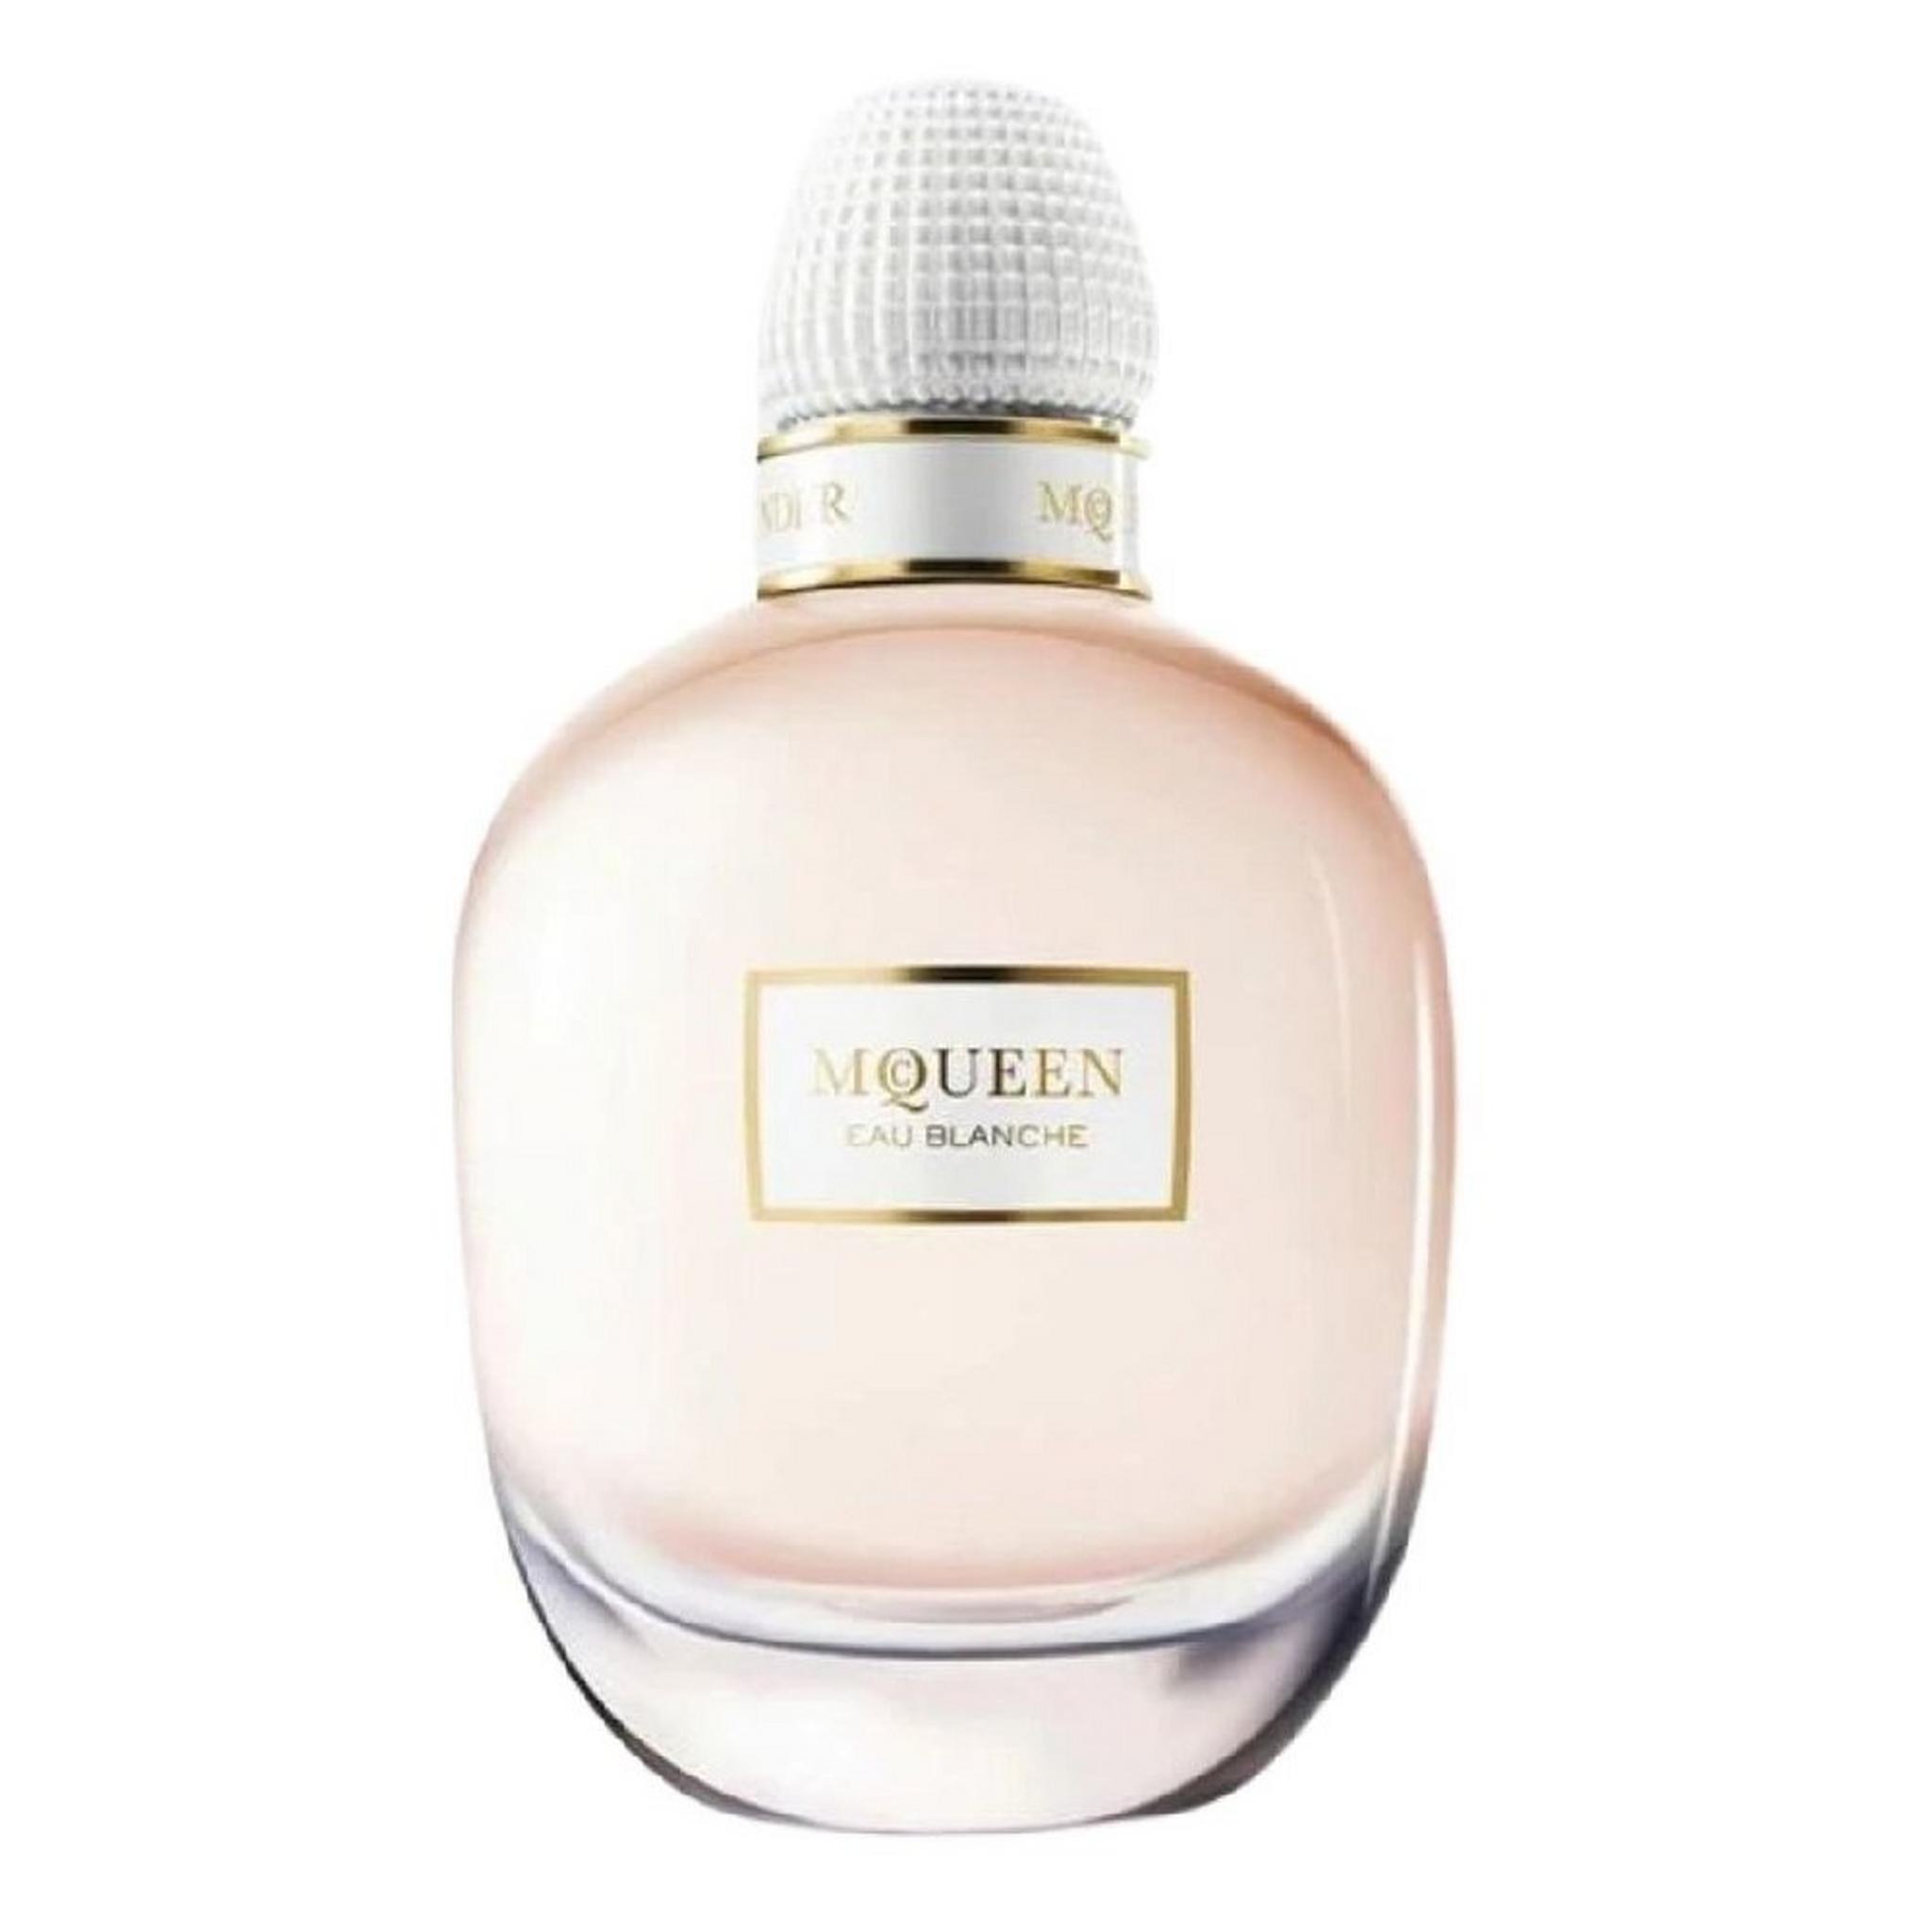 Alexander McQueen McQueen Eau Blanche for Women - Eau De Perfume, 75ml